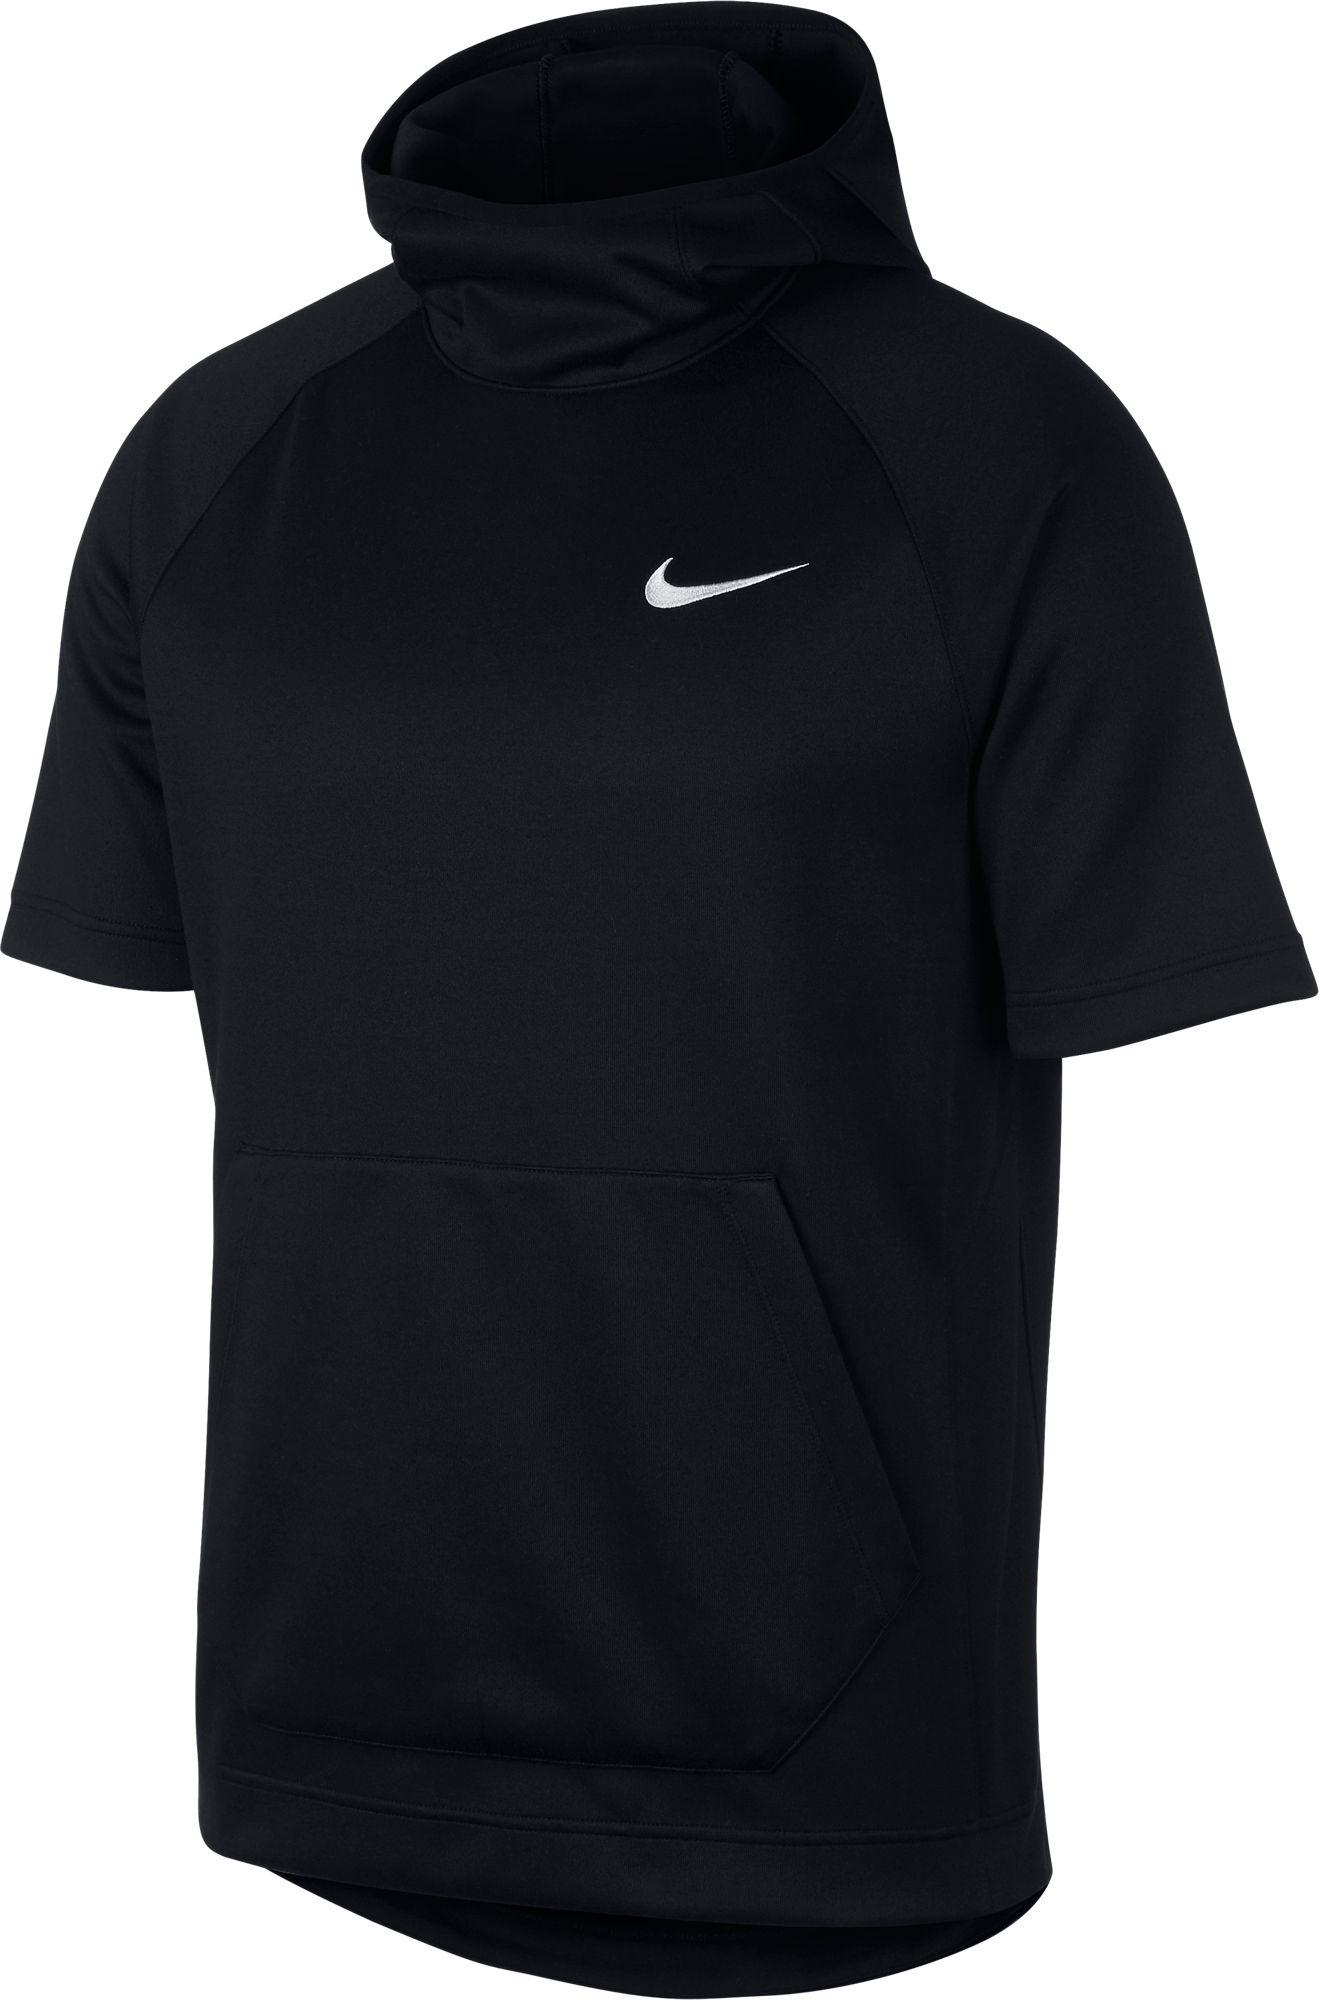 Nike Synthetic Dri-fit Spotlight Short Sleeve Hoodie in Black/White ...